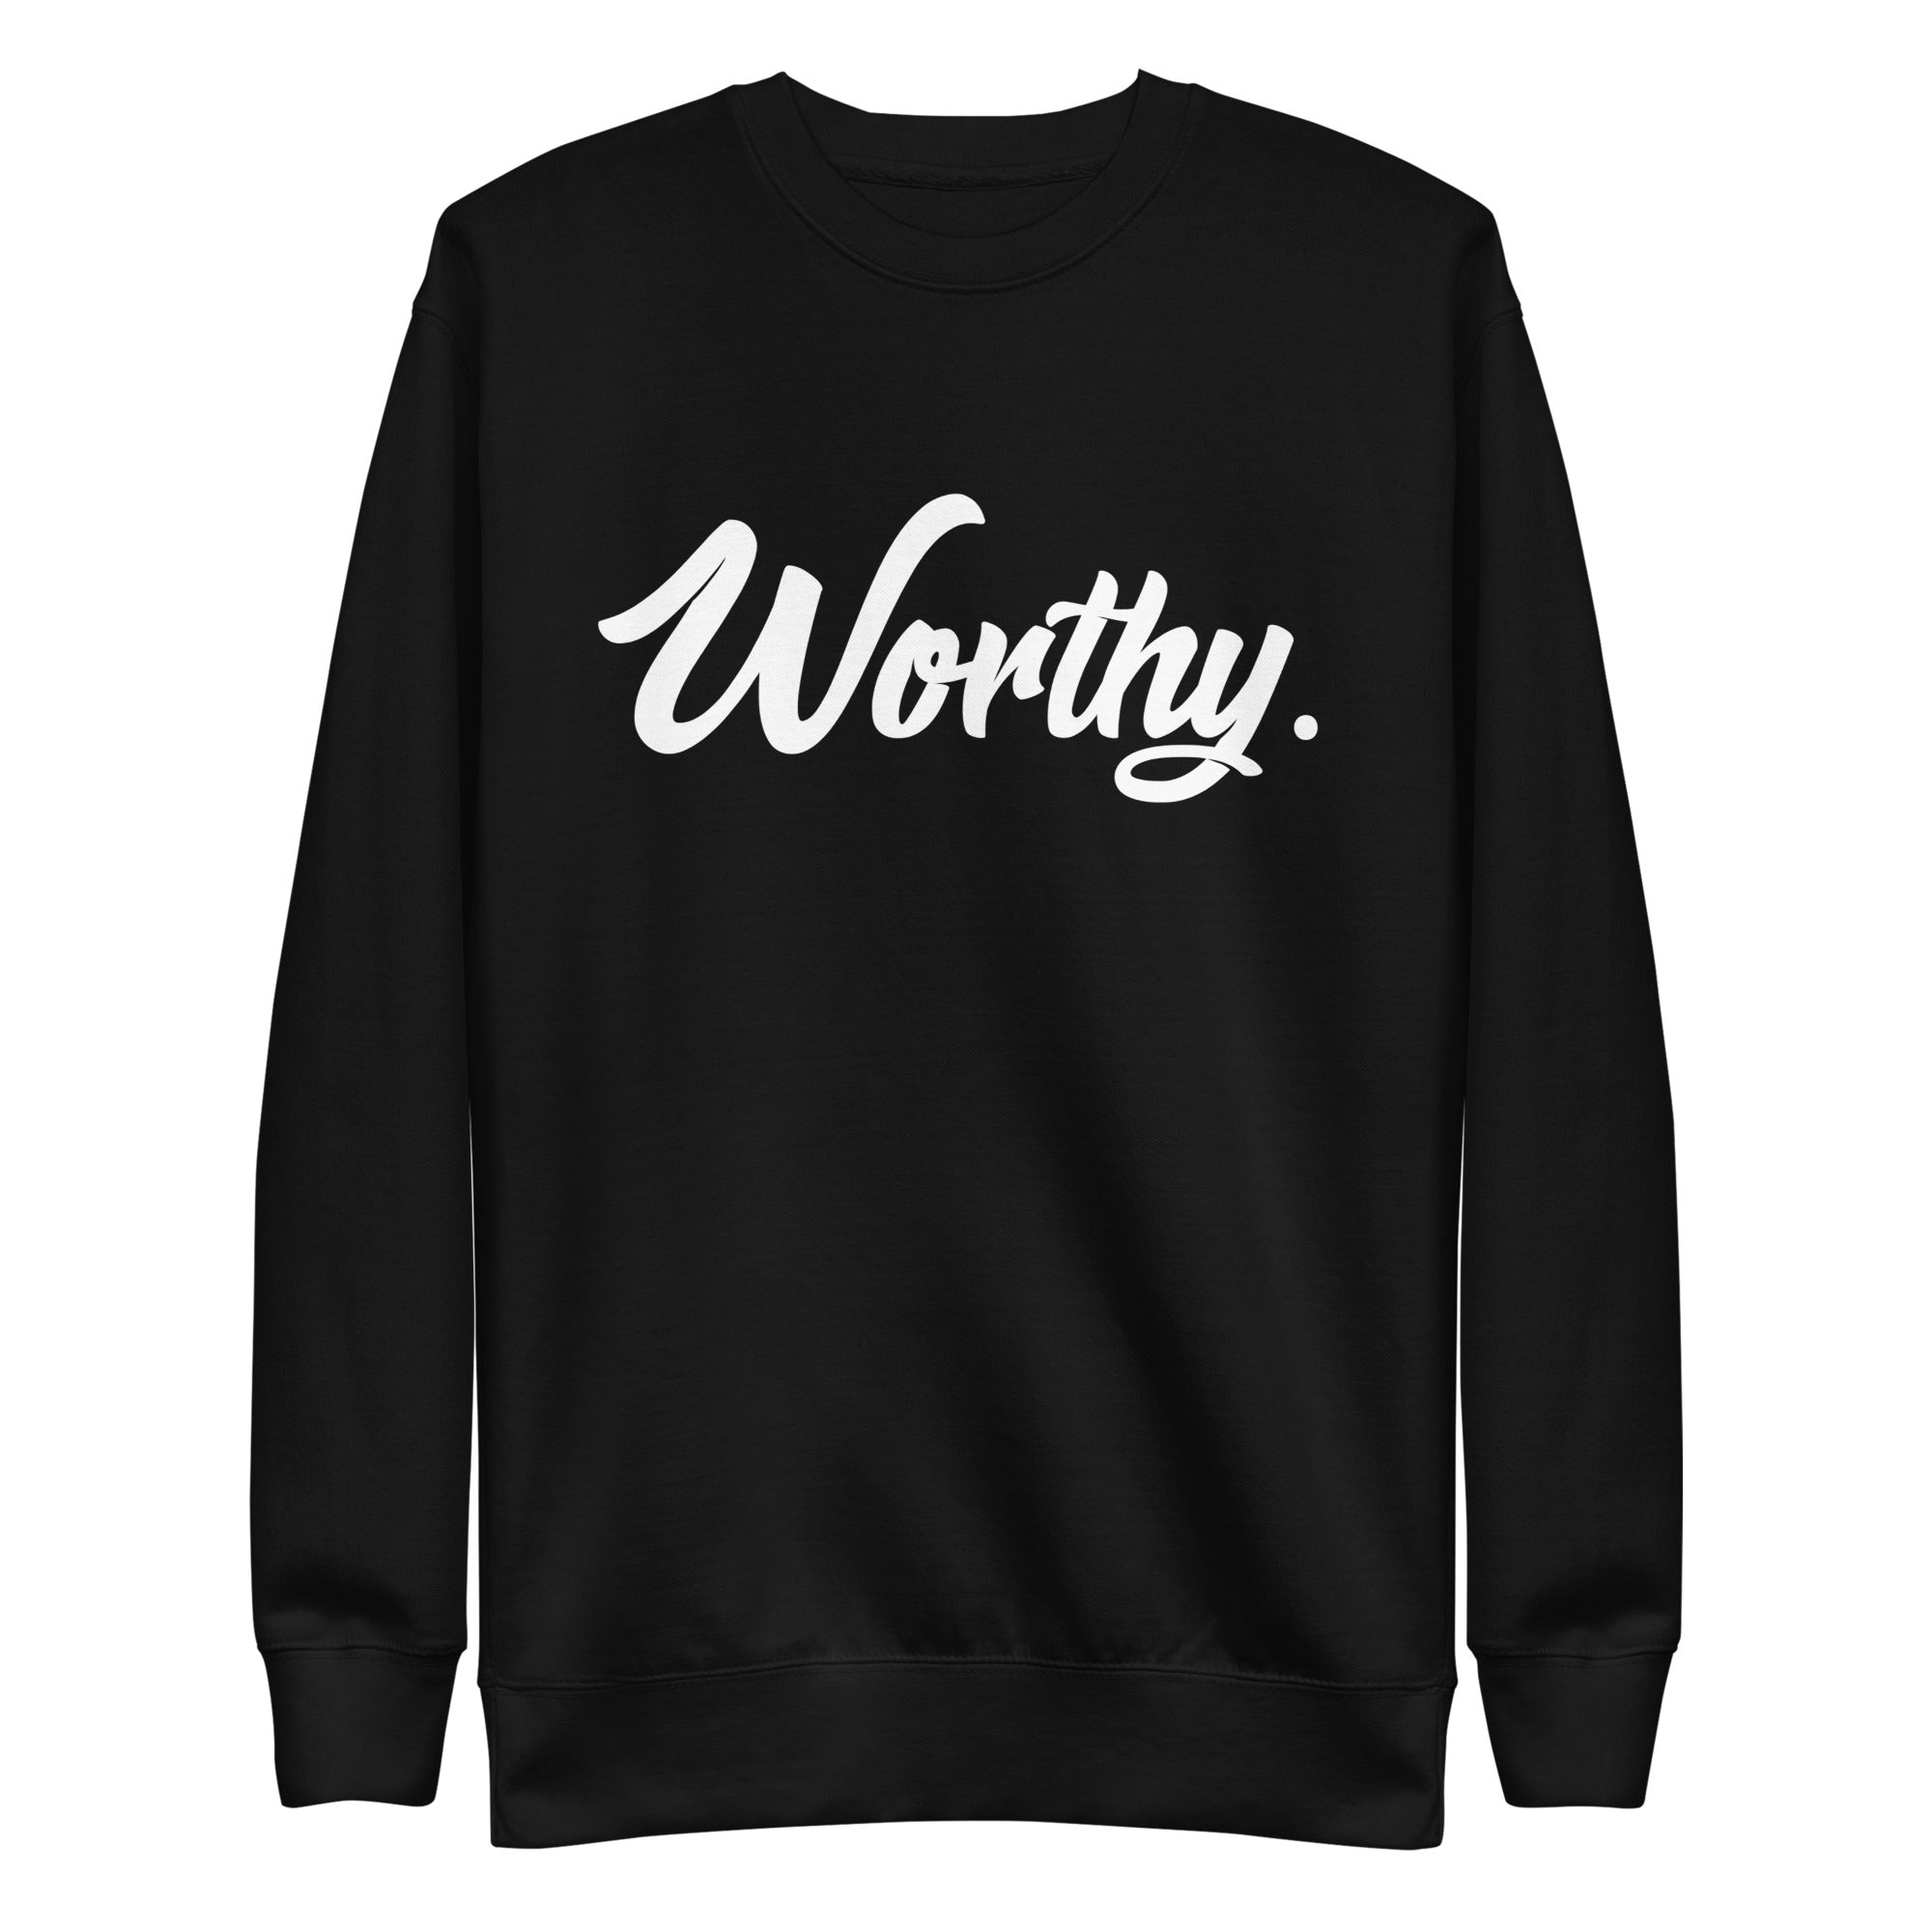 Worthy. Premium Sweatshirt